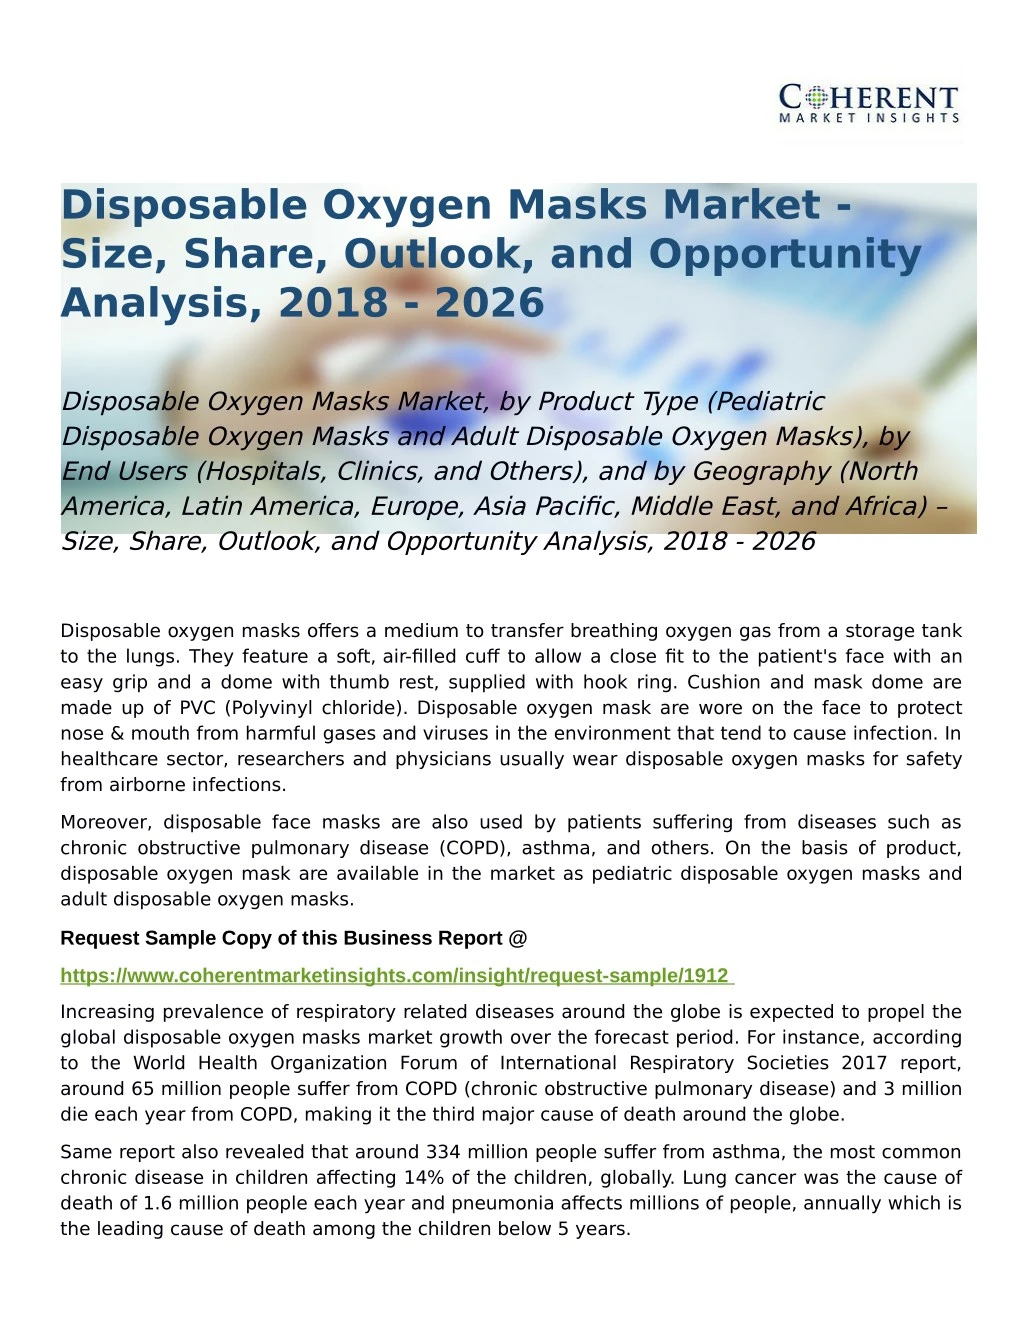 disposable oxygen masks market size share outlook